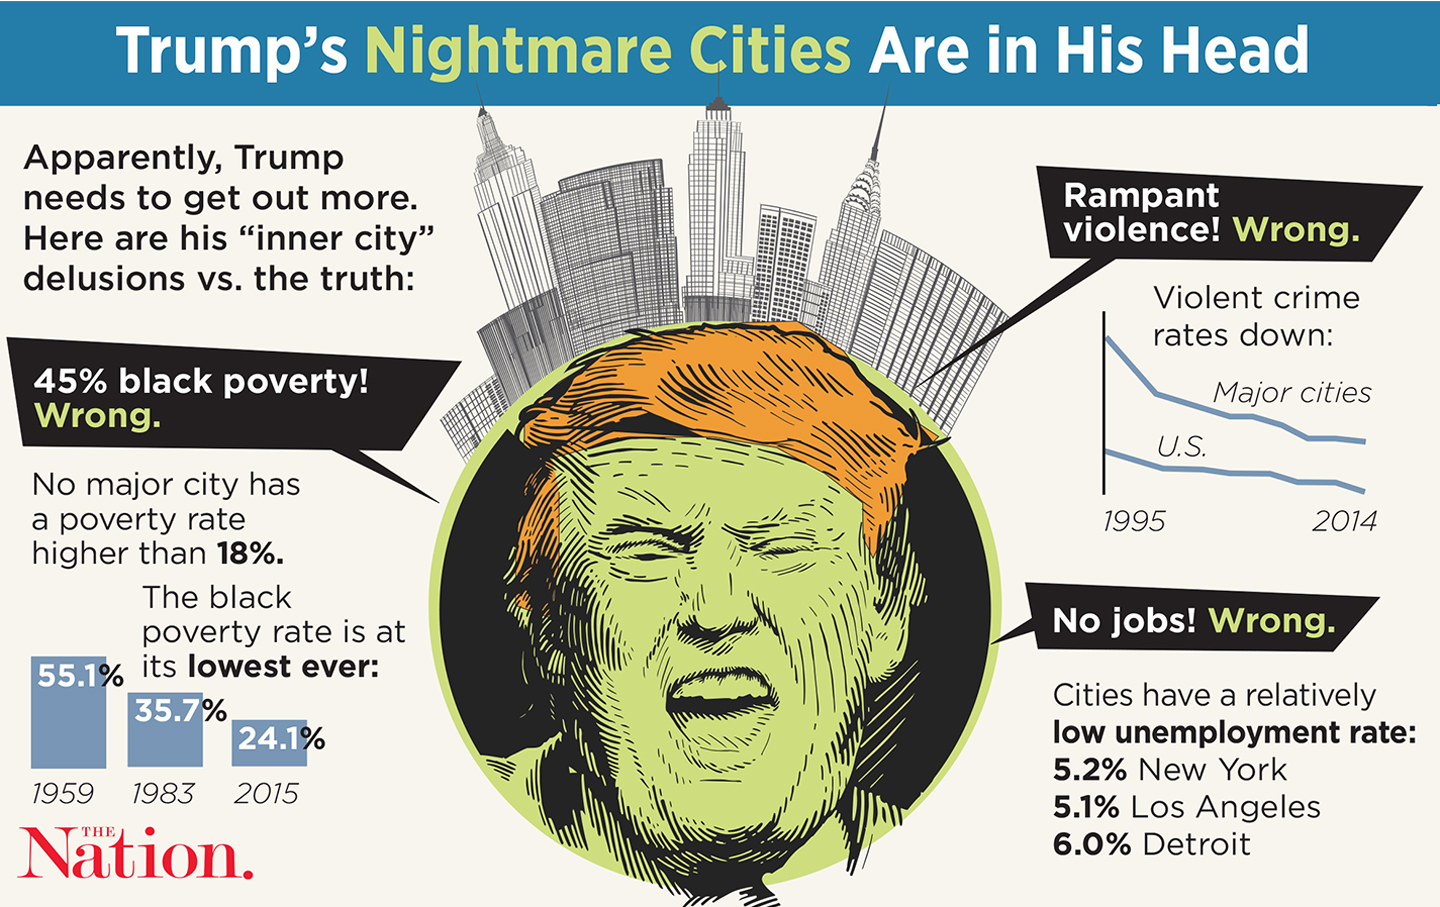 Donald Trump’s Imaginary Inner Cities